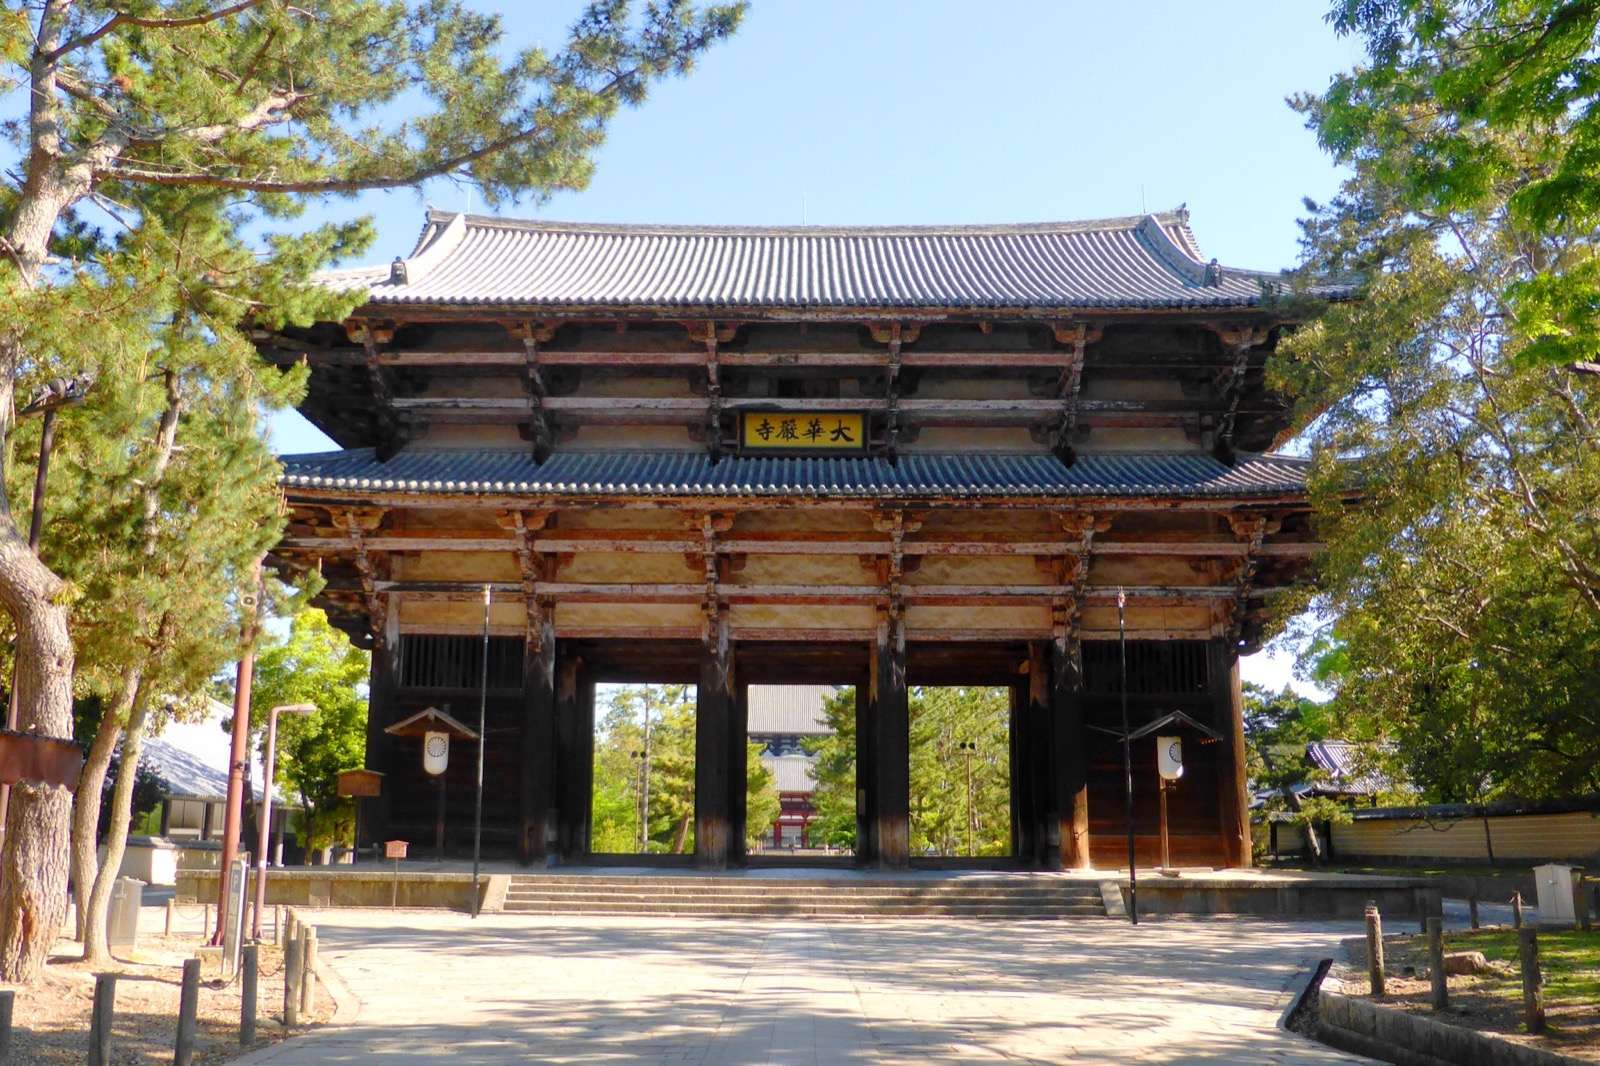 Photo of Nandaimon Gate, Japan (Todai-ji, Nandai-mon (Graet South Gate) -1 (May 2019) by Tetsuhiro Terada)